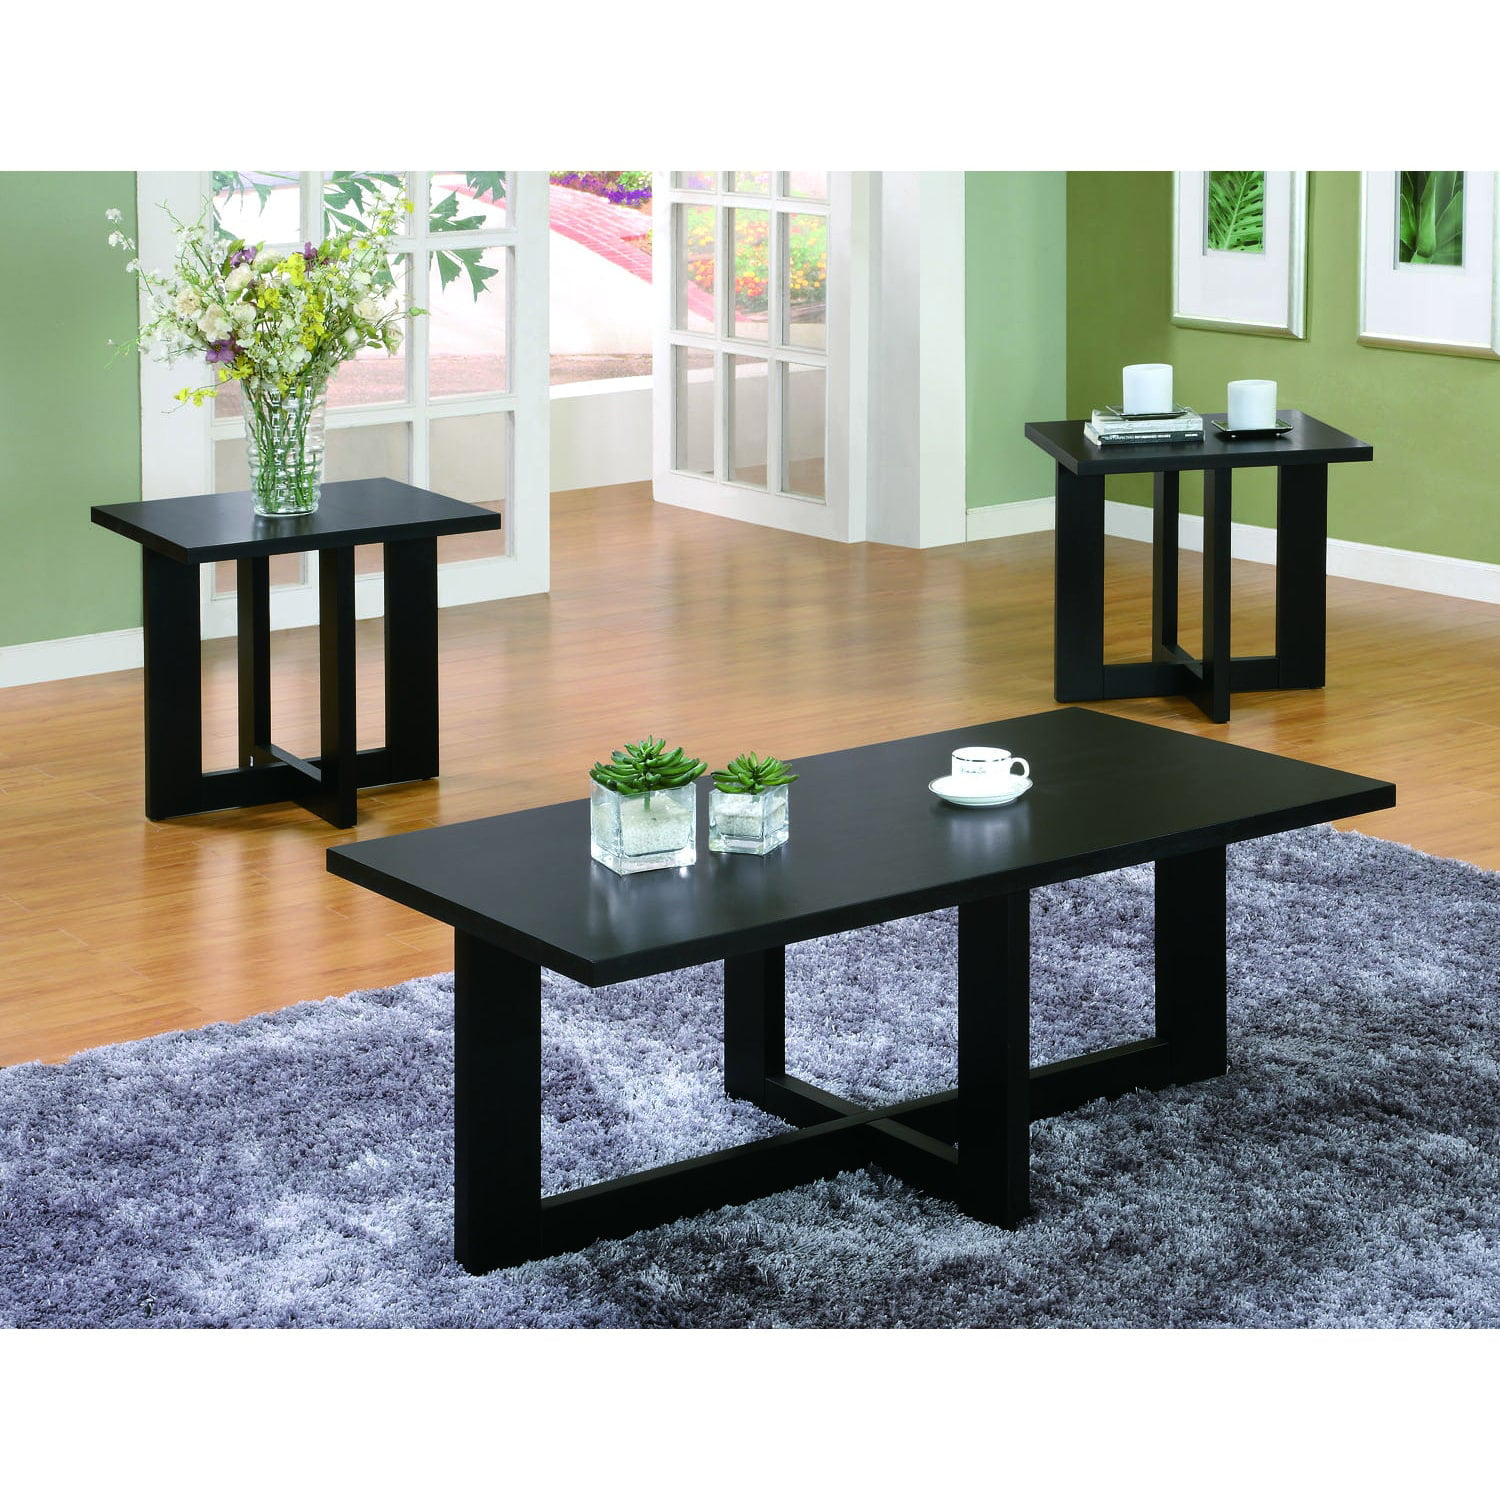 MONARCH SPECIALTIES INC Black Veneer Coffee Table and End Tables 3